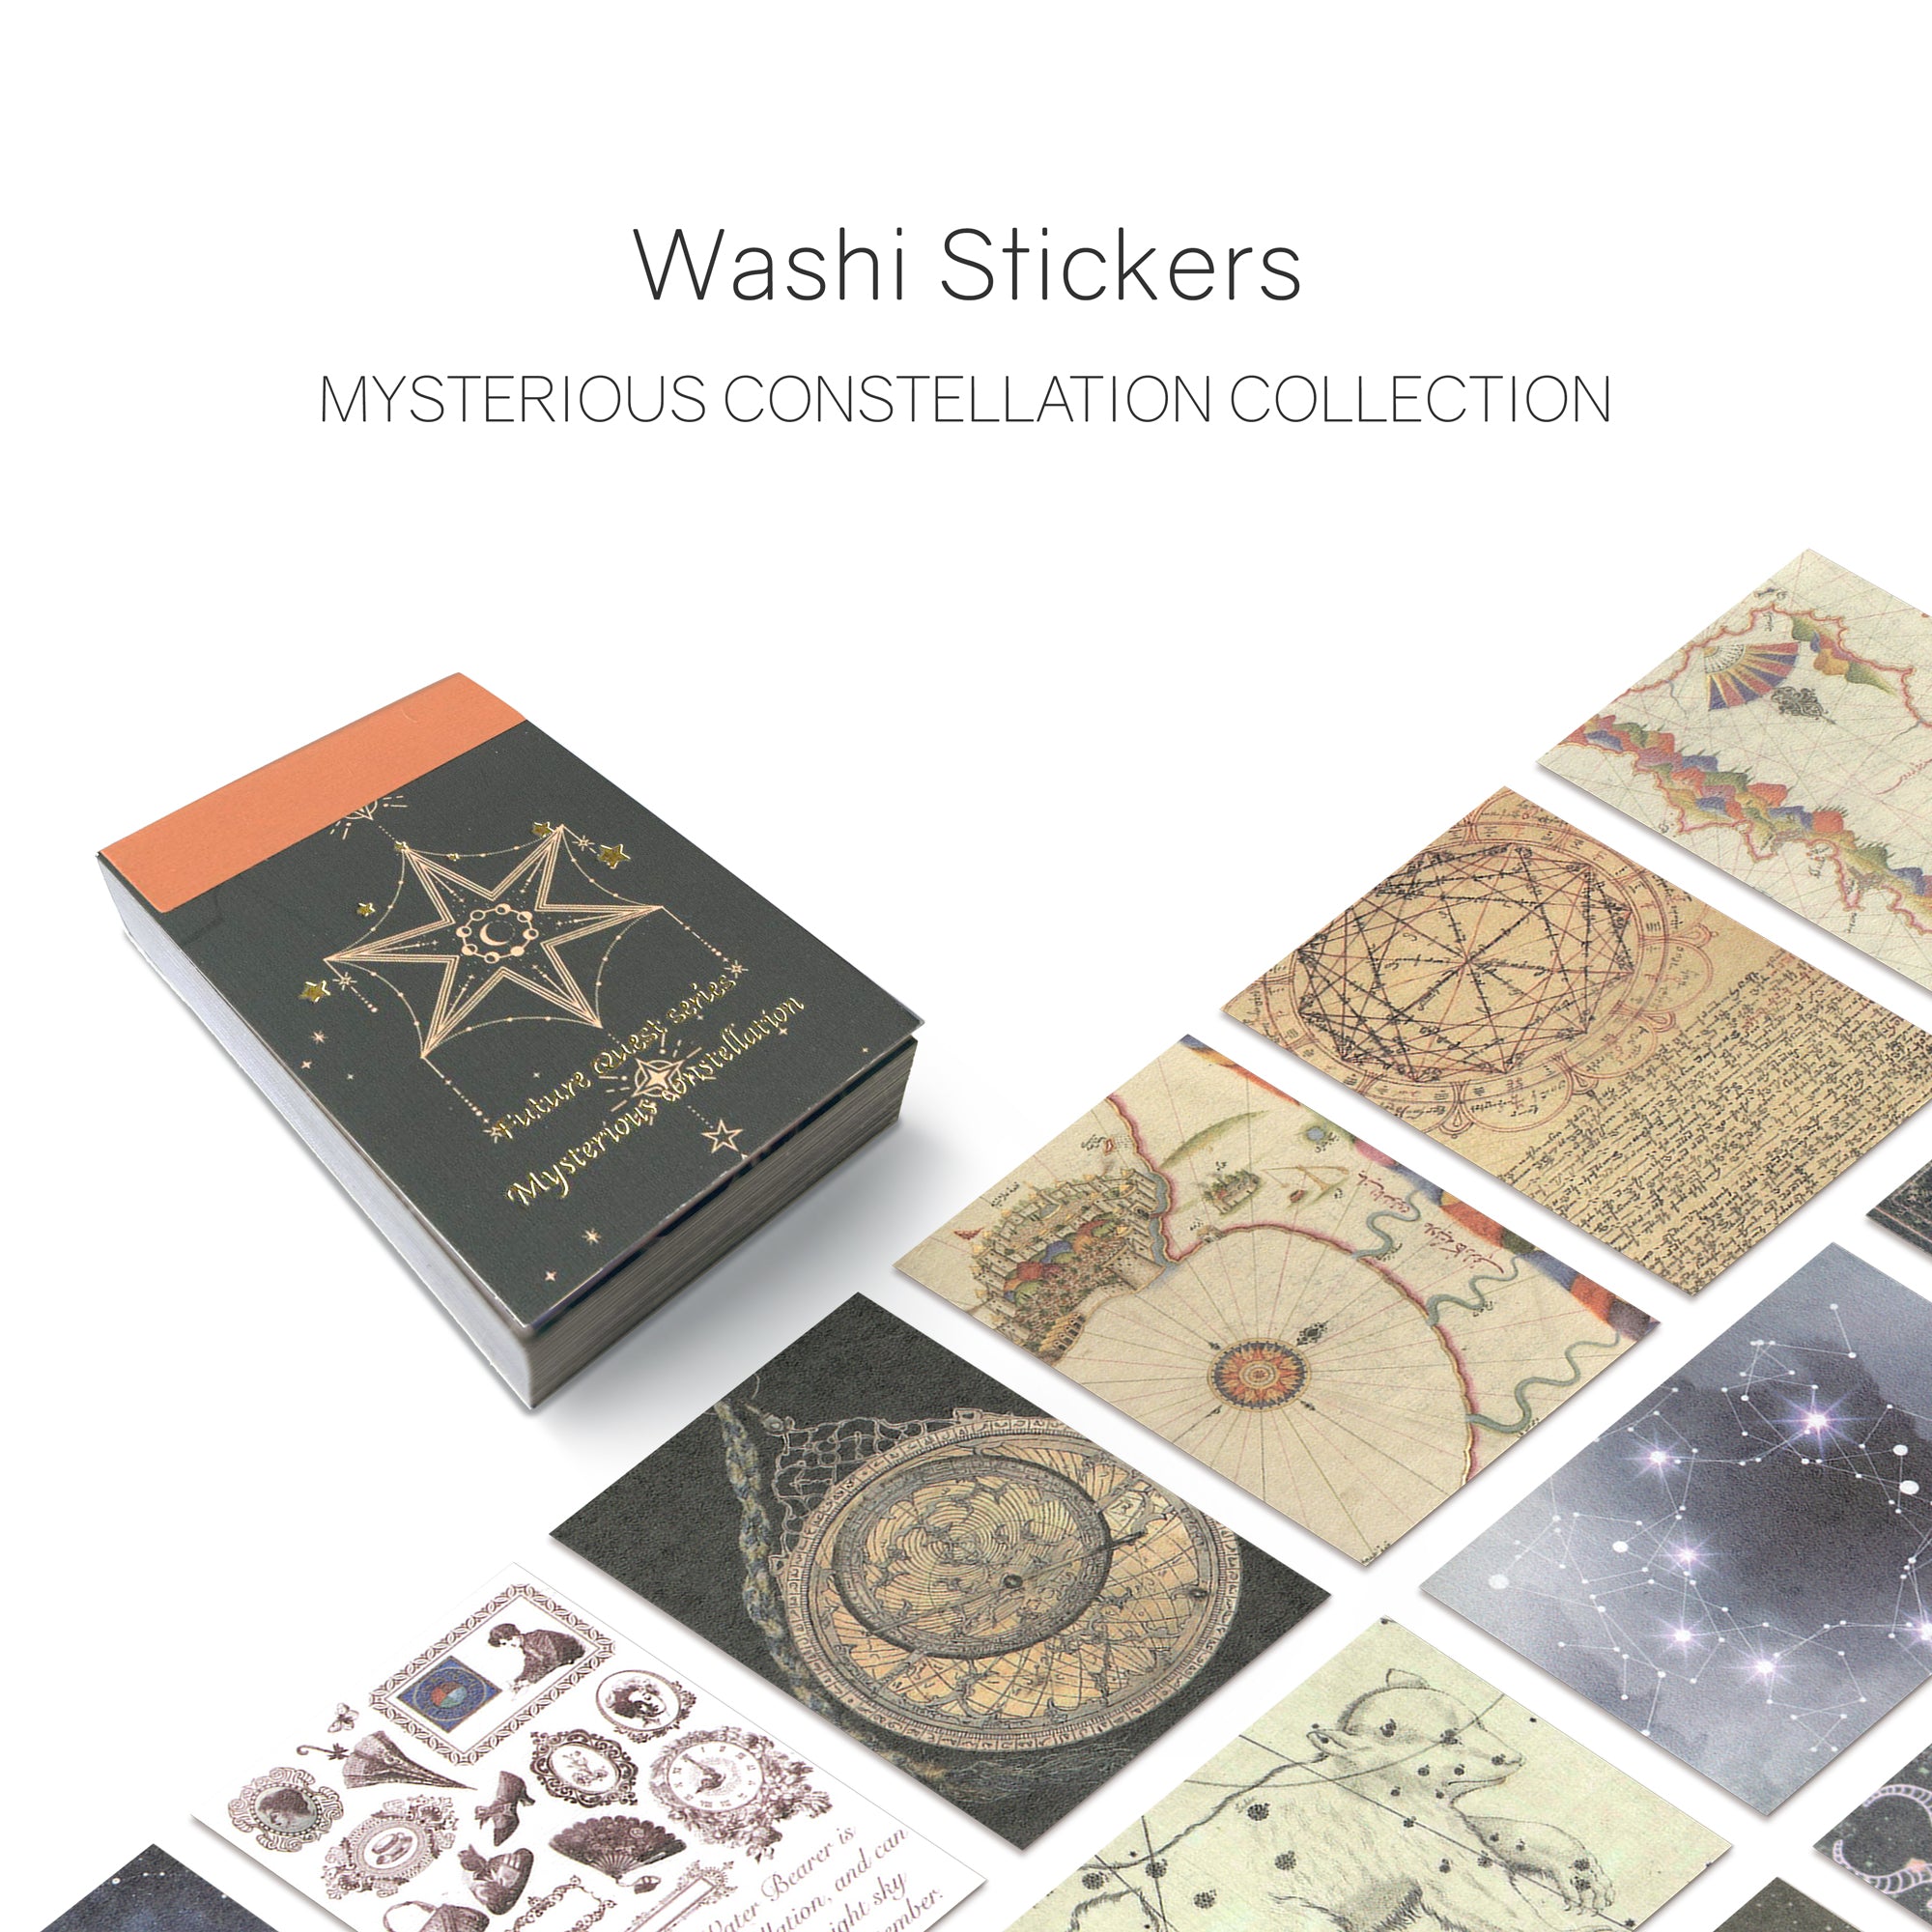 Celestial Mini Washi Sticker Books